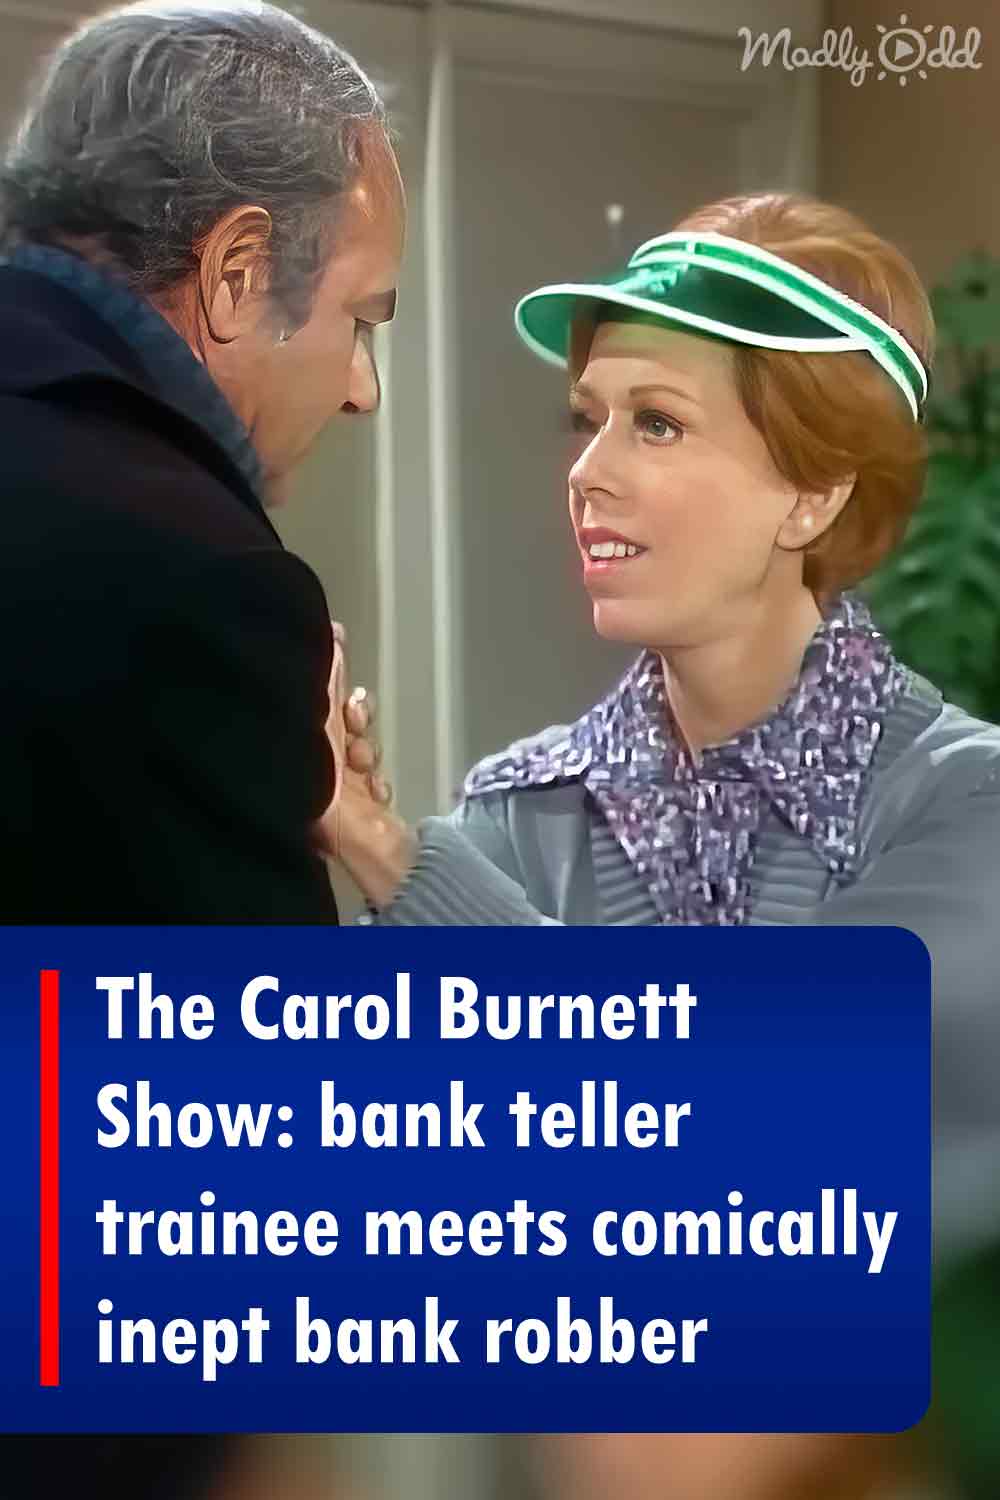 The Carol Burnett Show: bank teller trainee meets comically inept bank robber